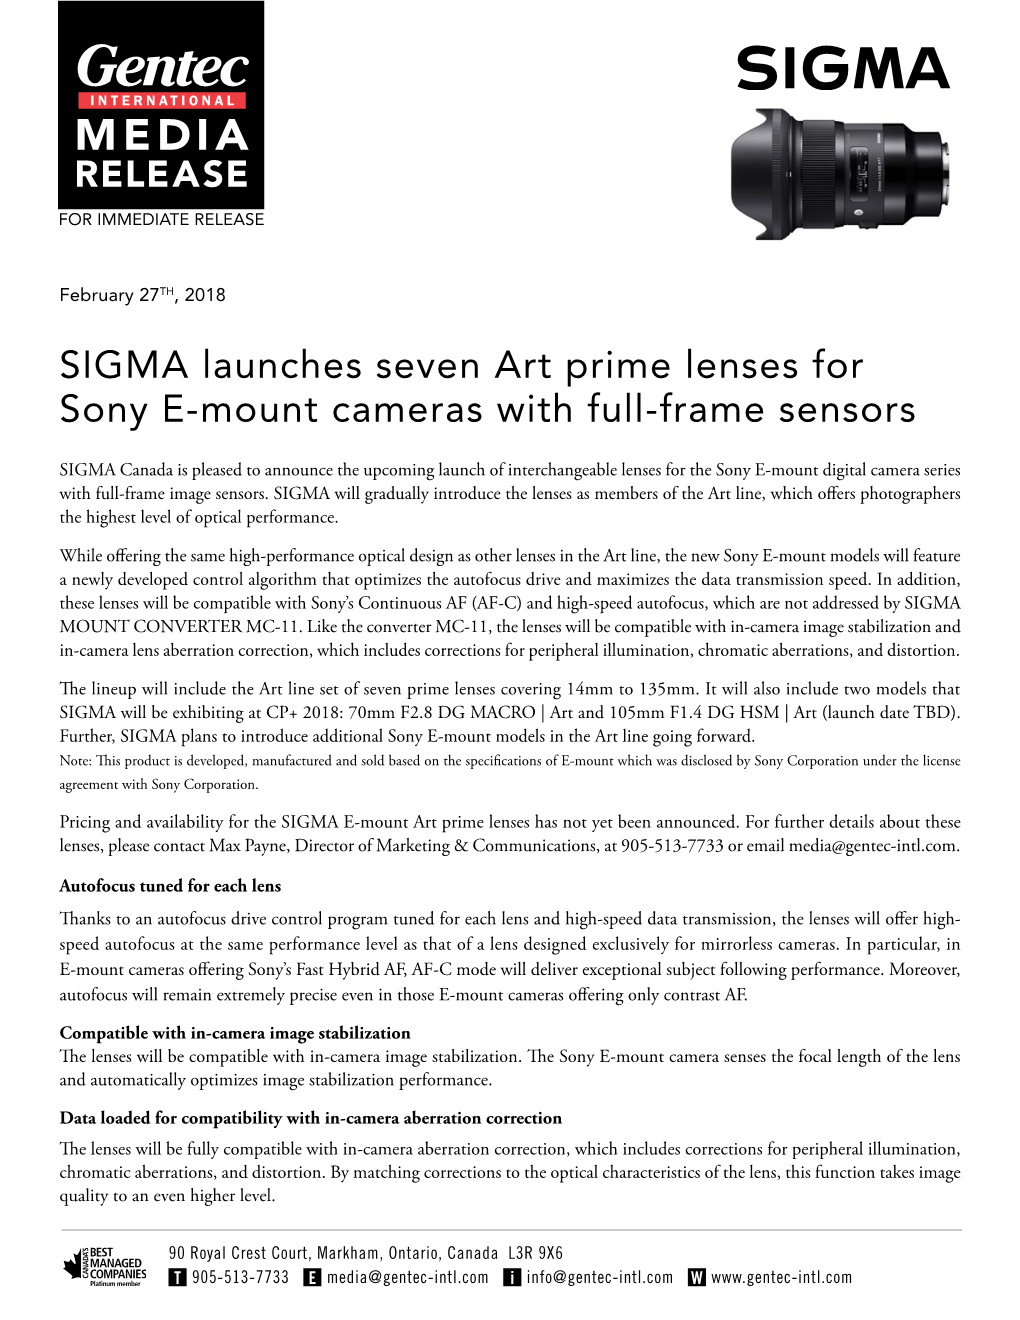 SIGMA Launches Seven Art Prime Lenses for Sony E-Mount Cameras with Full-Frame Sensors